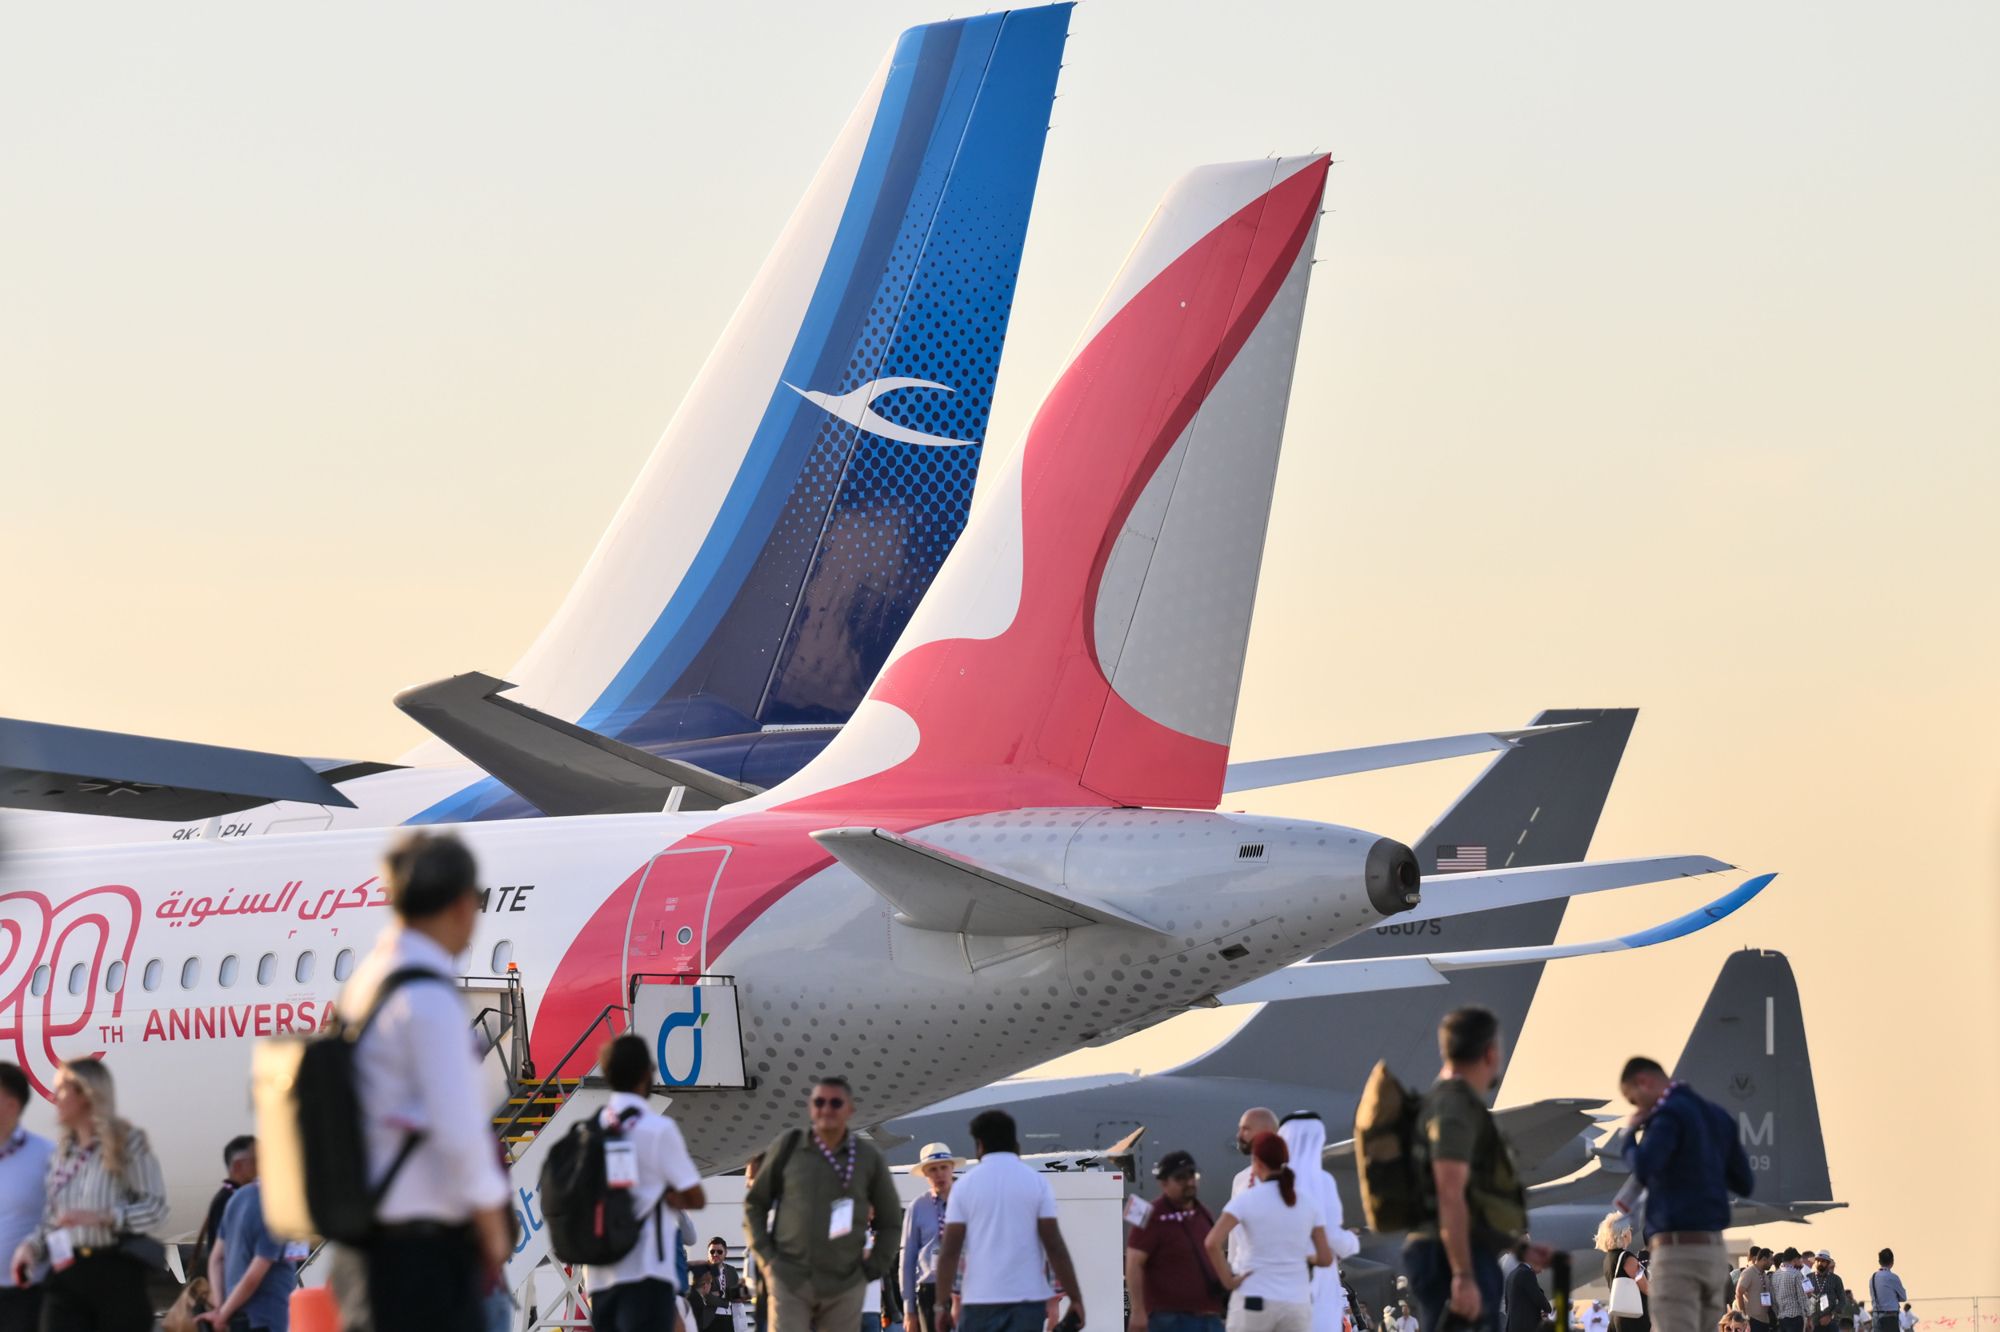 Dubai Airshow aircraft on static display